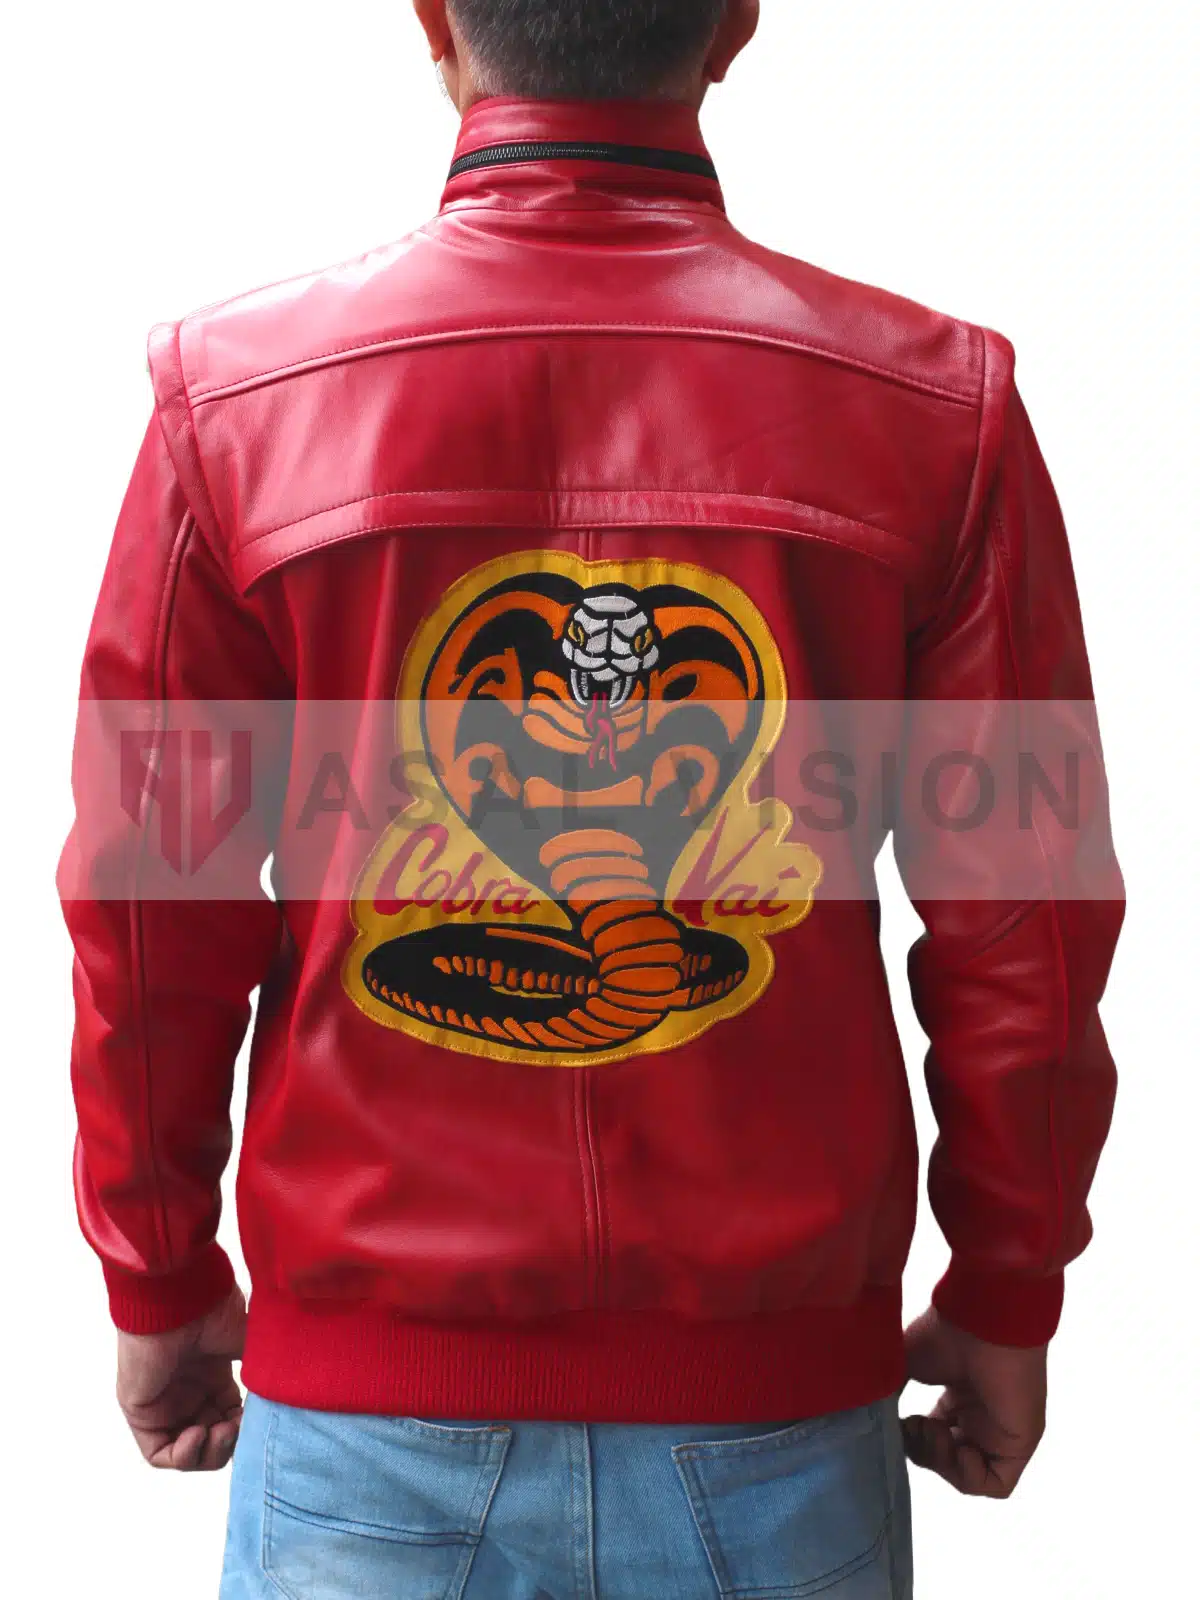 Johnny Lawrence William Zabka Cobra Kai Red Real Leather Jacket